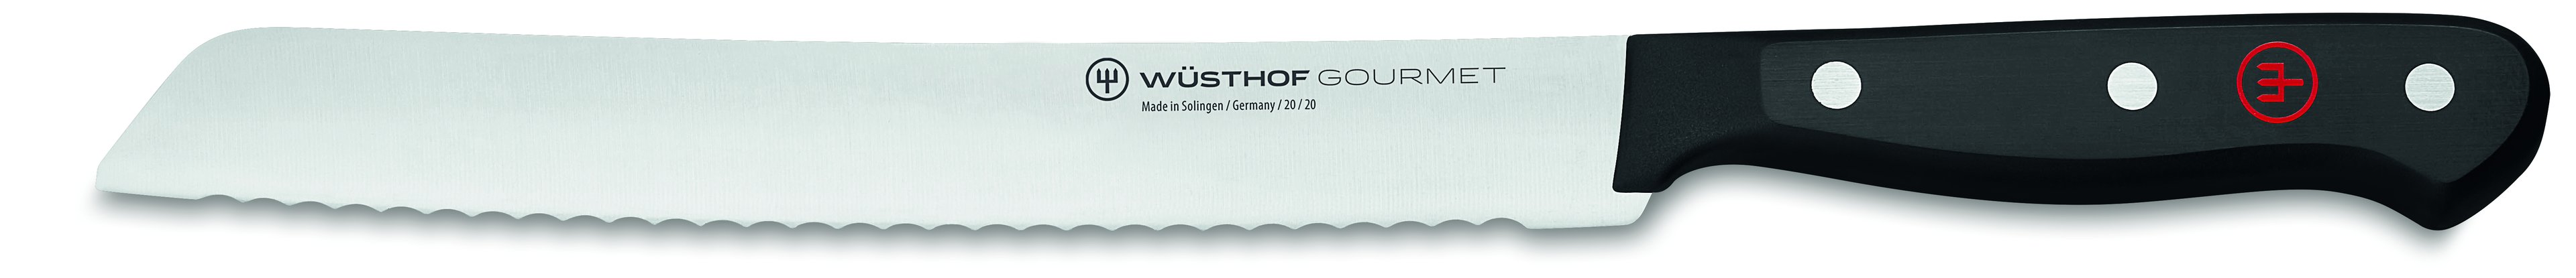 Wüsthof Gourmet Brotmesser 20